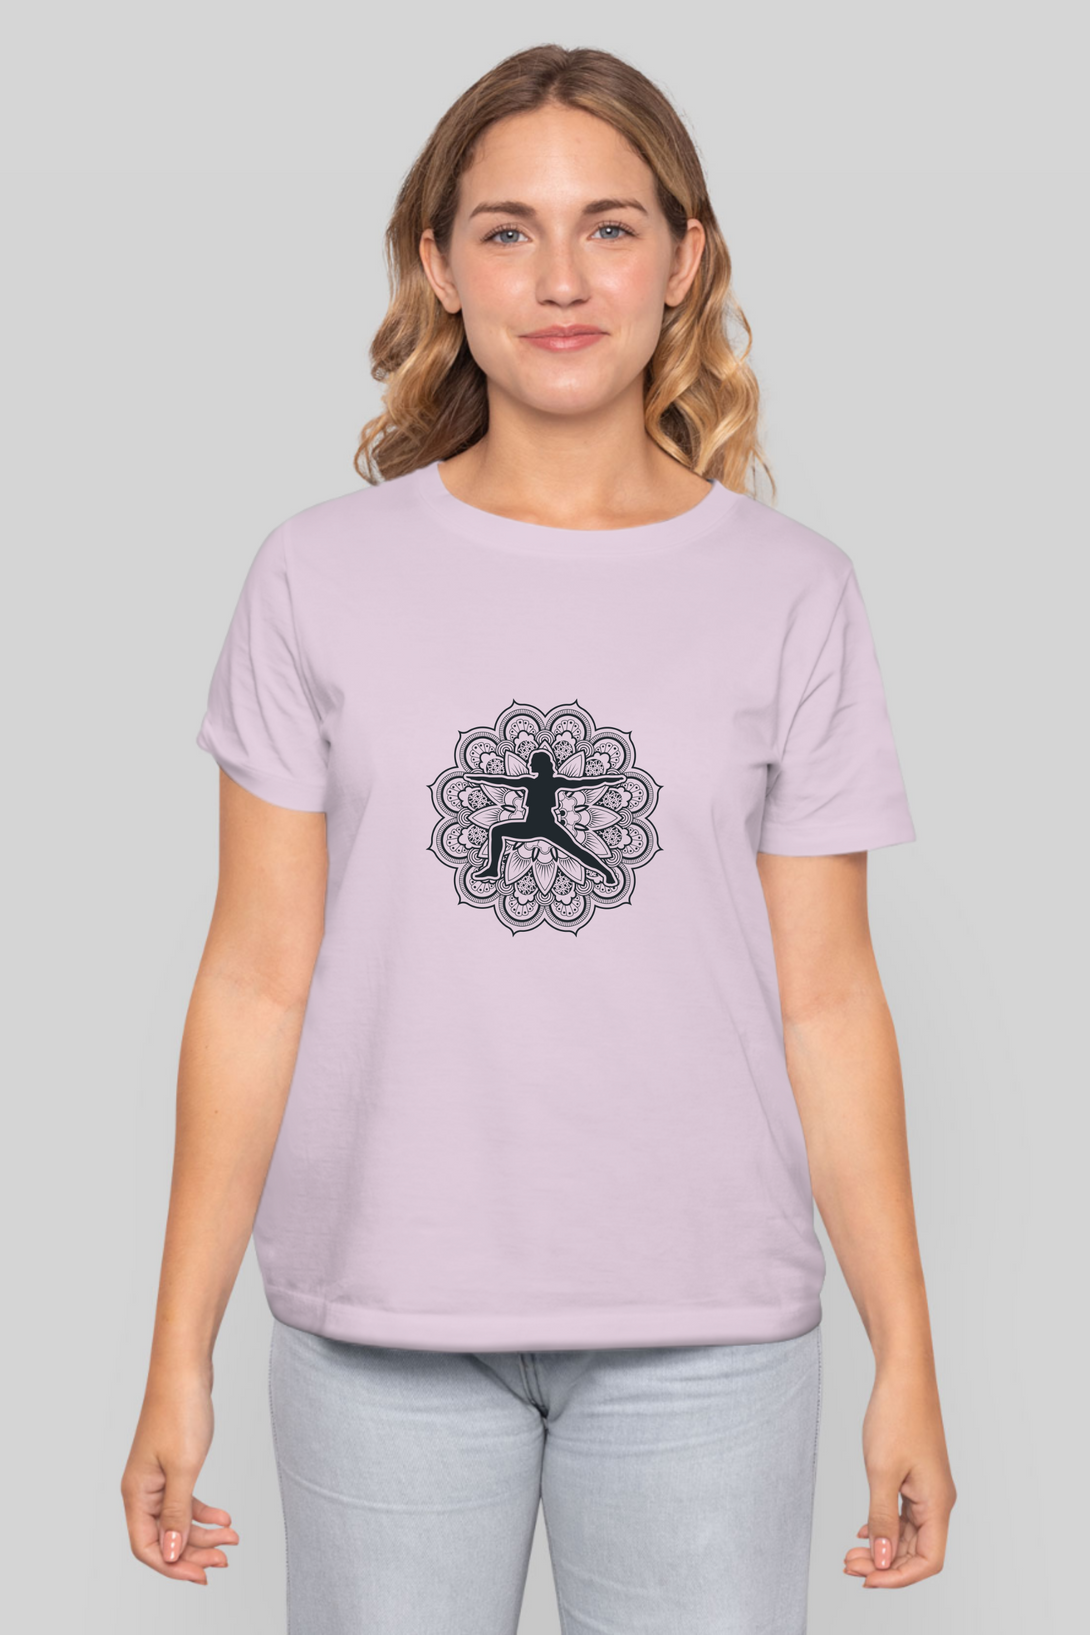 Yoga Pose Mandala Printed T-Shirt For Women - WowWaves - 7